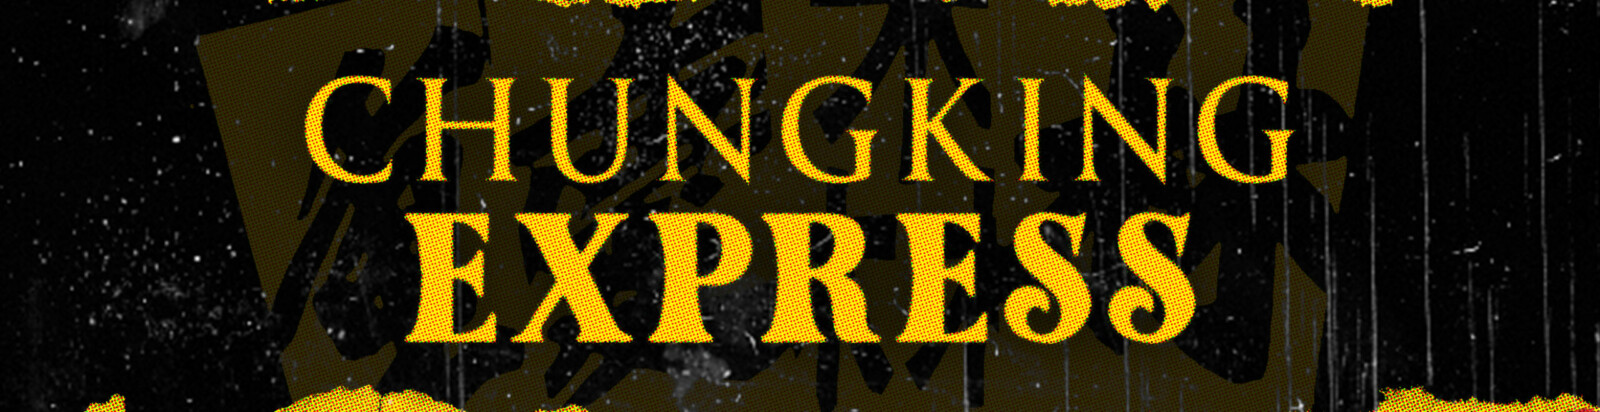 Chungking Express (1993) – Alternate Movie Poster